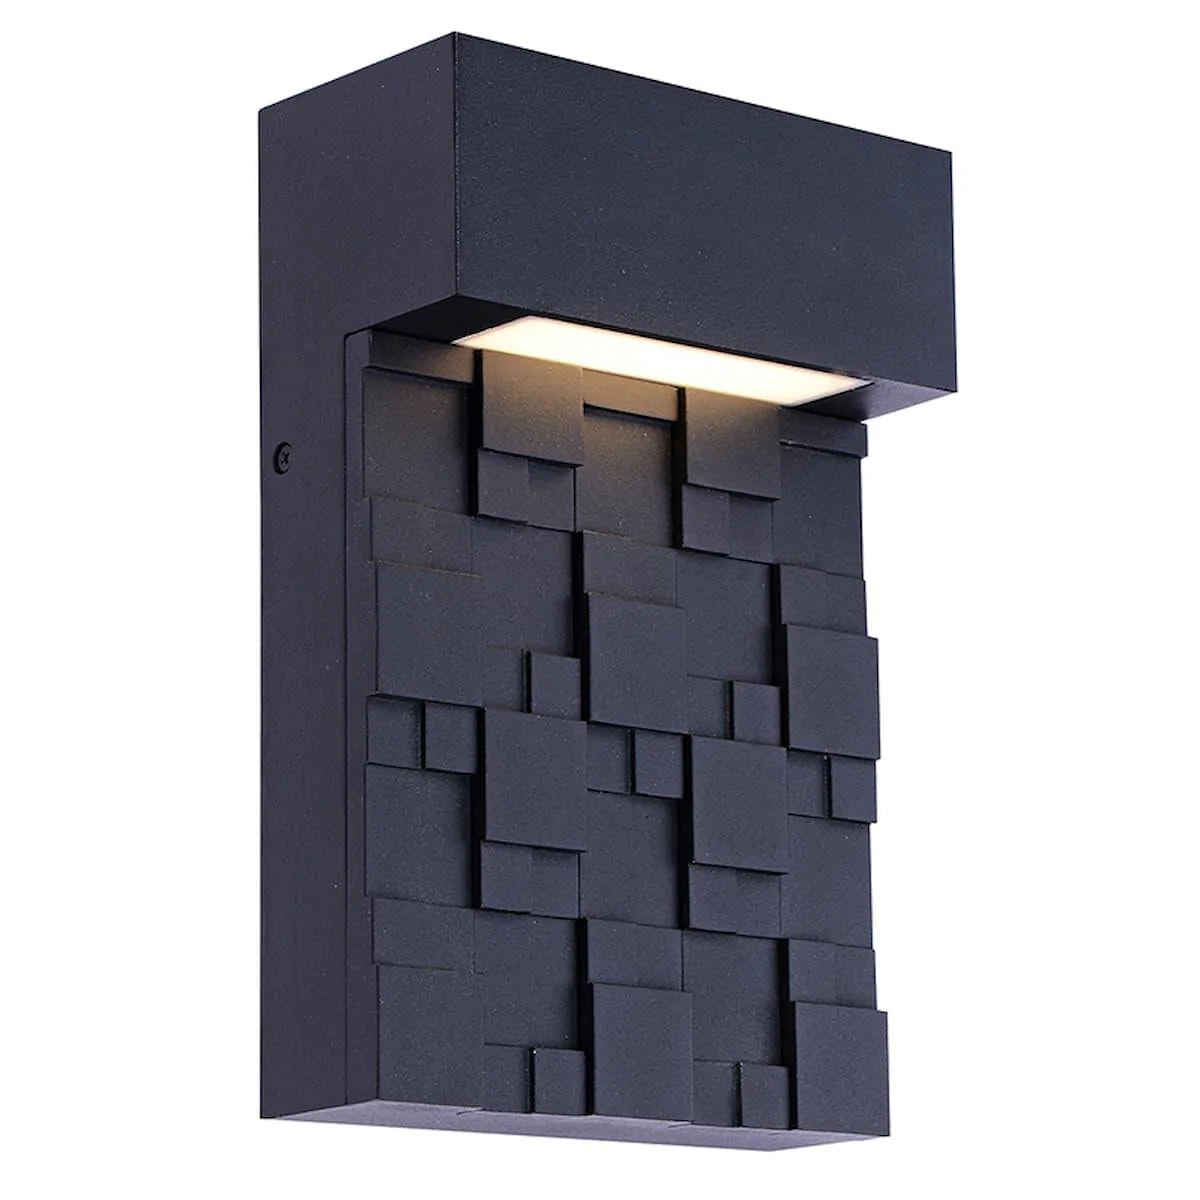 OUTDOOR LED WALL LIGHT, BLACK |EL1345/BL - Peter Murphy Lighting & Electrical Ltd